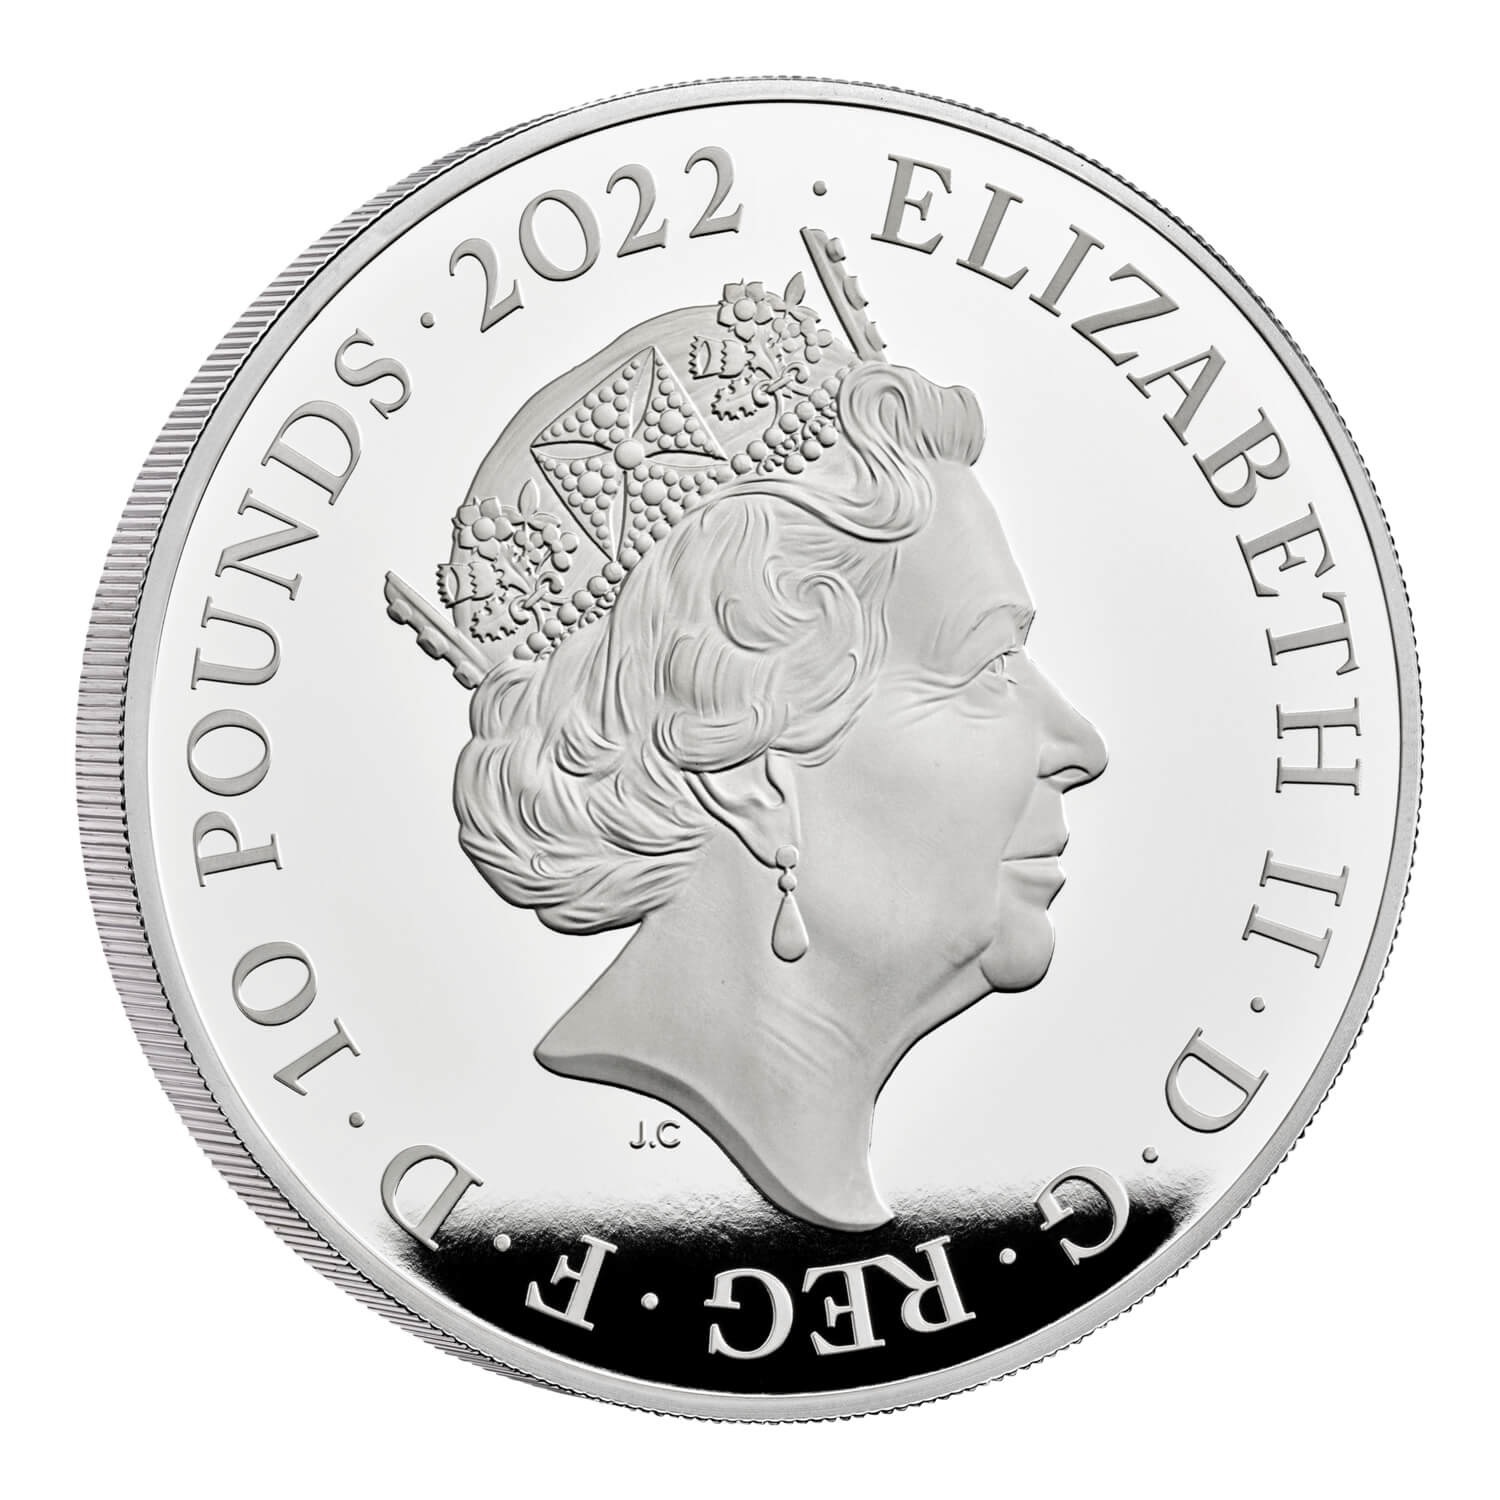 (W185.10.P.2022.UK22J1S5O) 10 Pounds United Kingdom 2022 5 oz Proof silver - King James I Obverse (zoom)